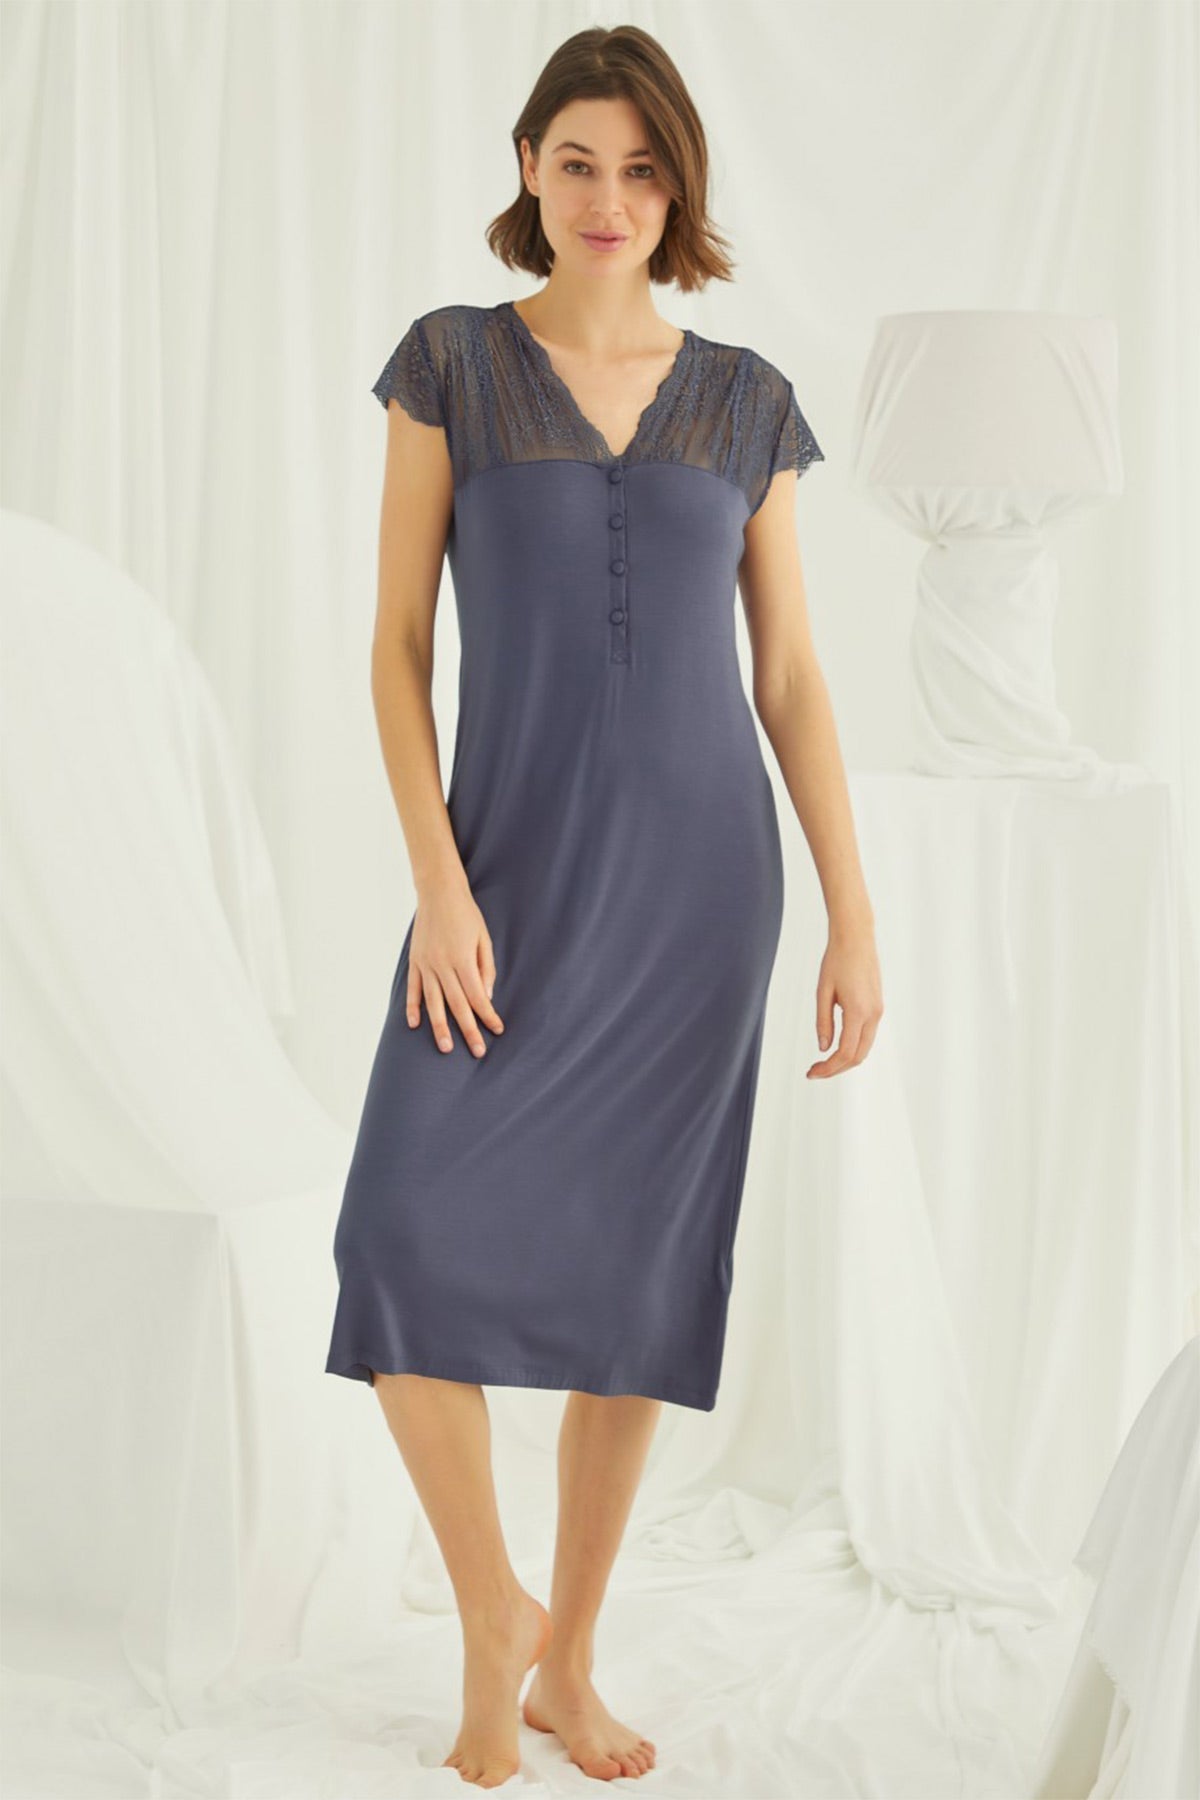 Shopymommy 18454 Lace V-Neck Plus Size Maternity & Nursing Nightgown Navy Blue